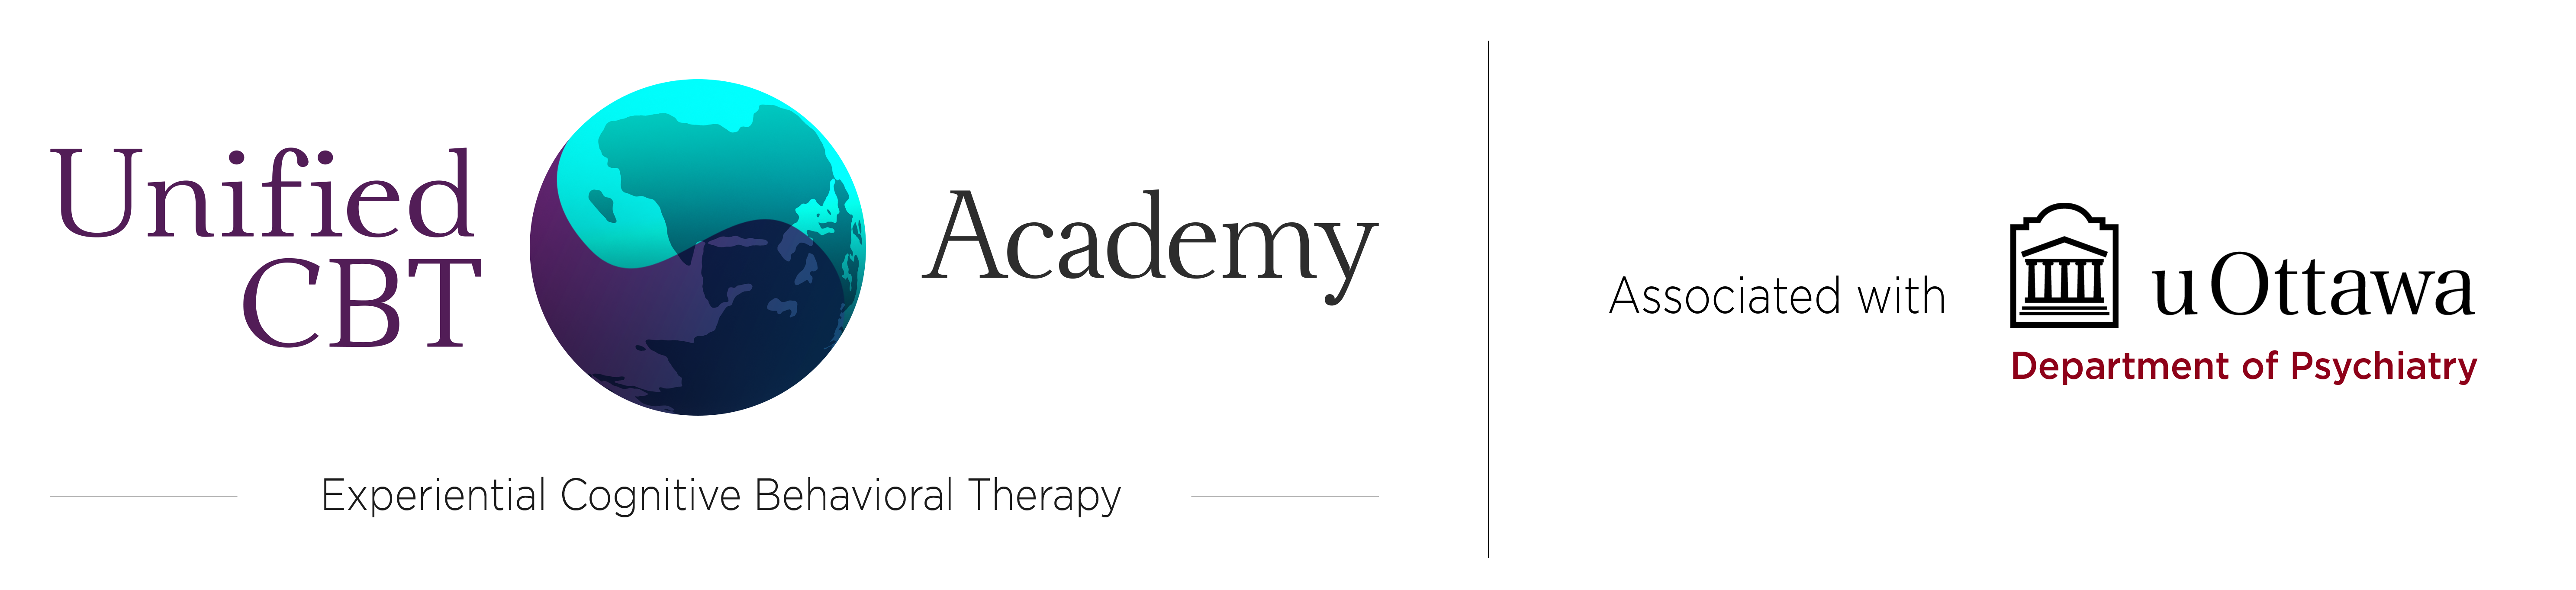 Unified CBT Academy Logo